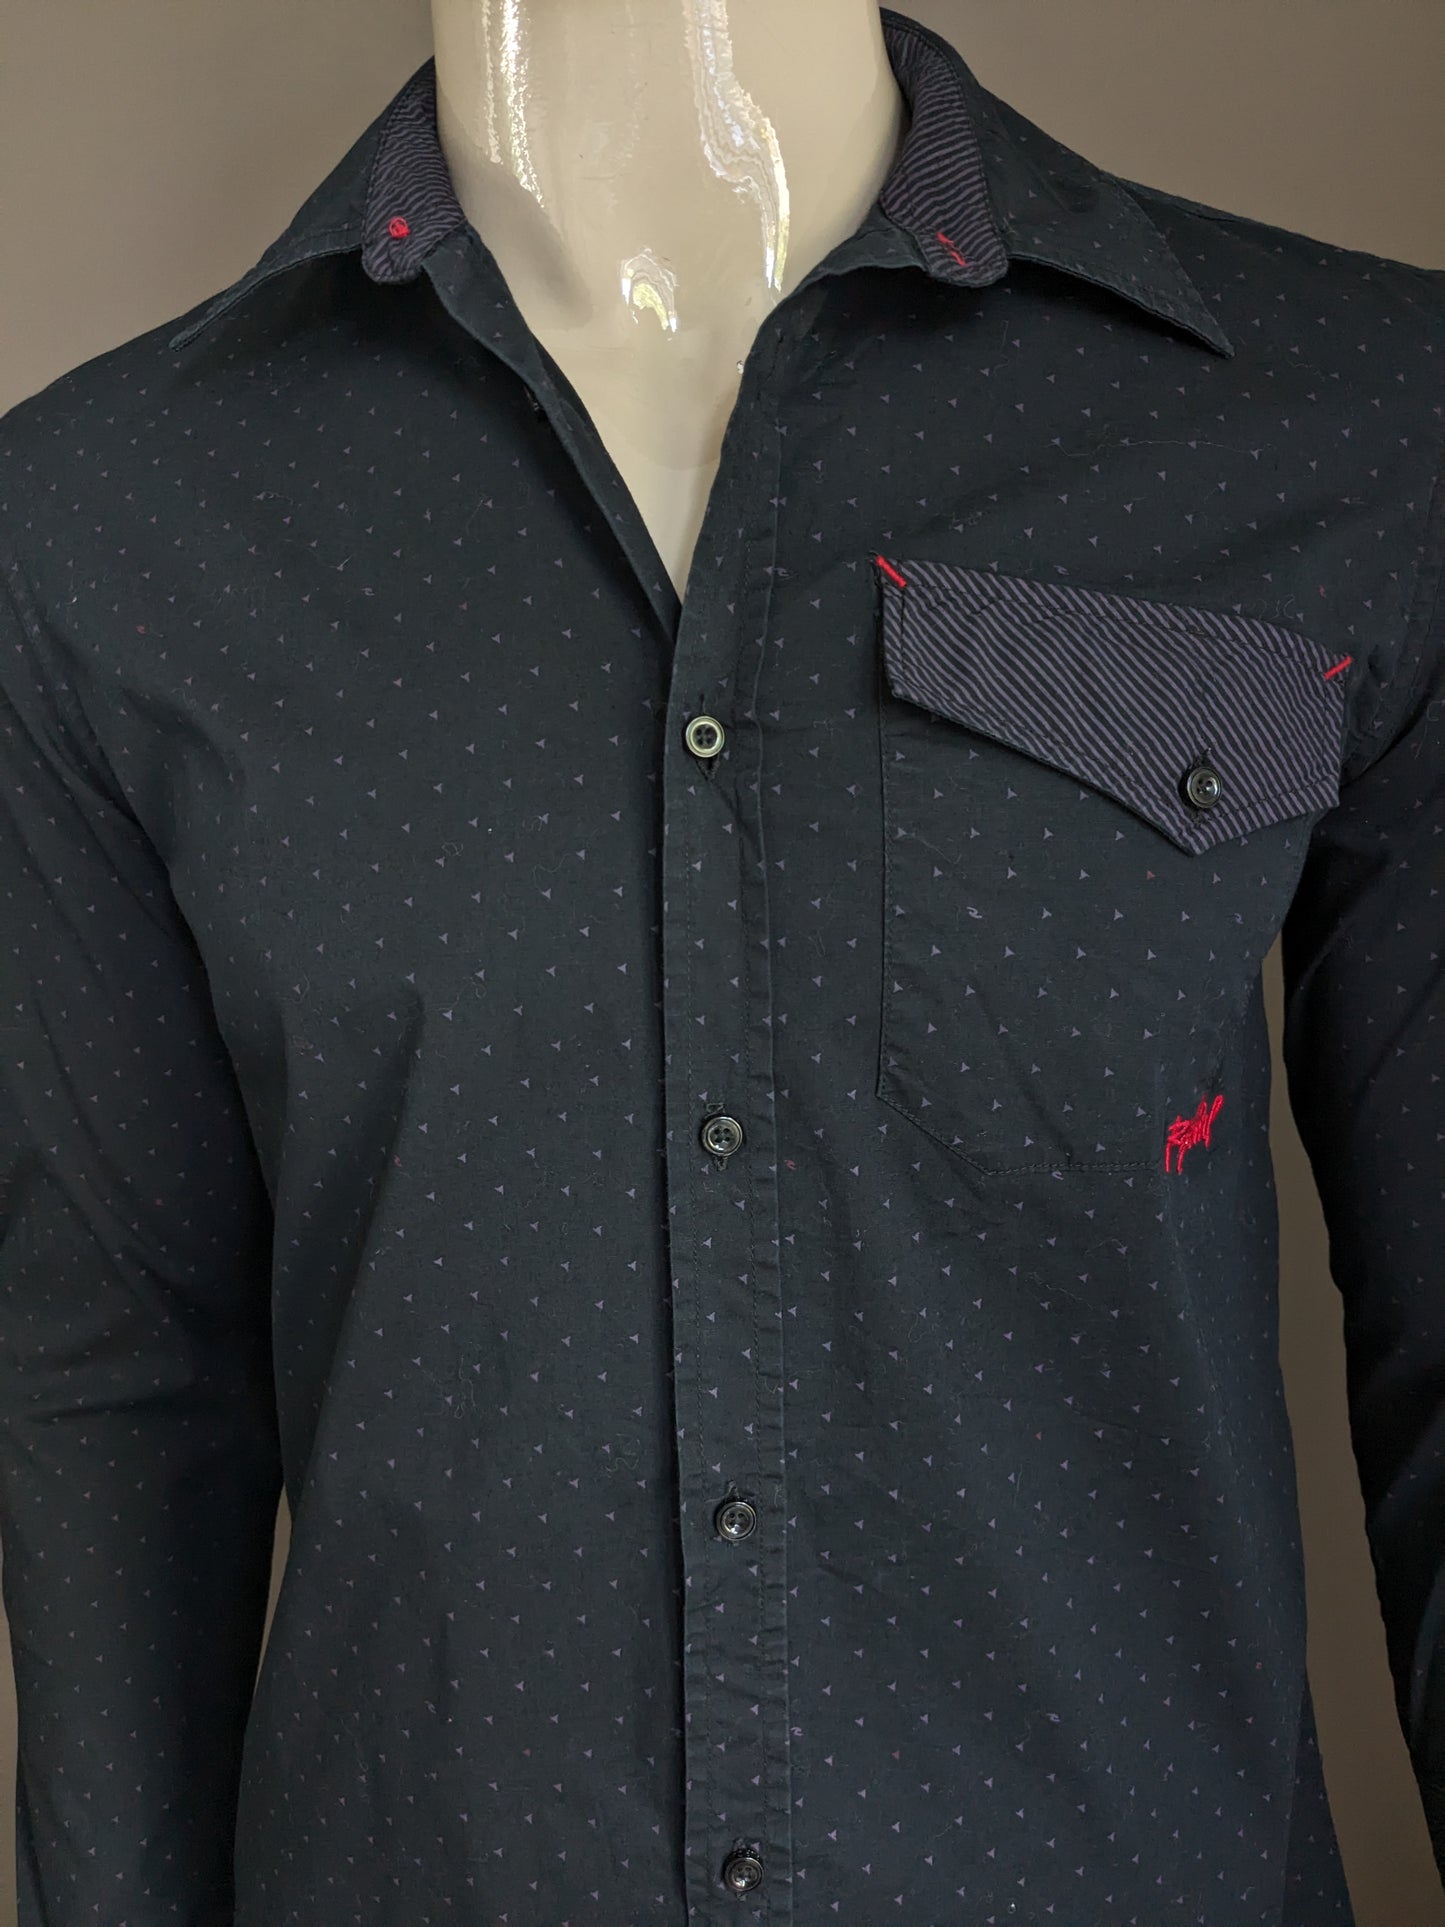 RipCurl overhemd. Zwart Paarse print met rode borduursels / stiksels. Maat M.